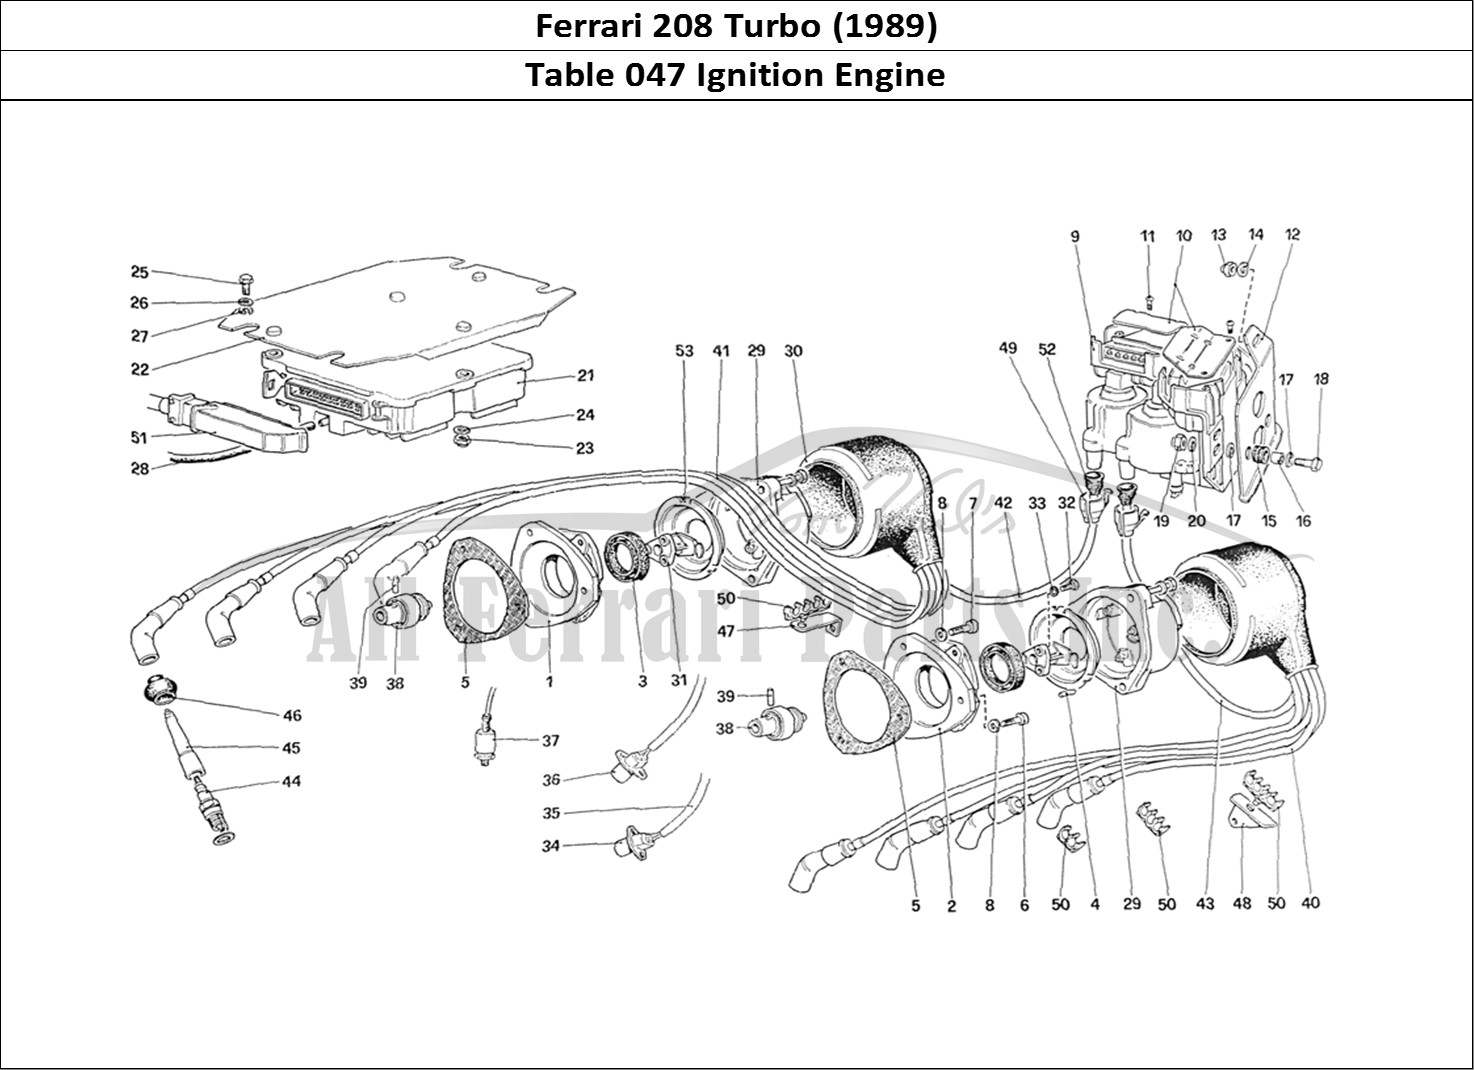 Ferrari Parts Ferrari 208 Turbo (1989) Page 047 Engine Ignition